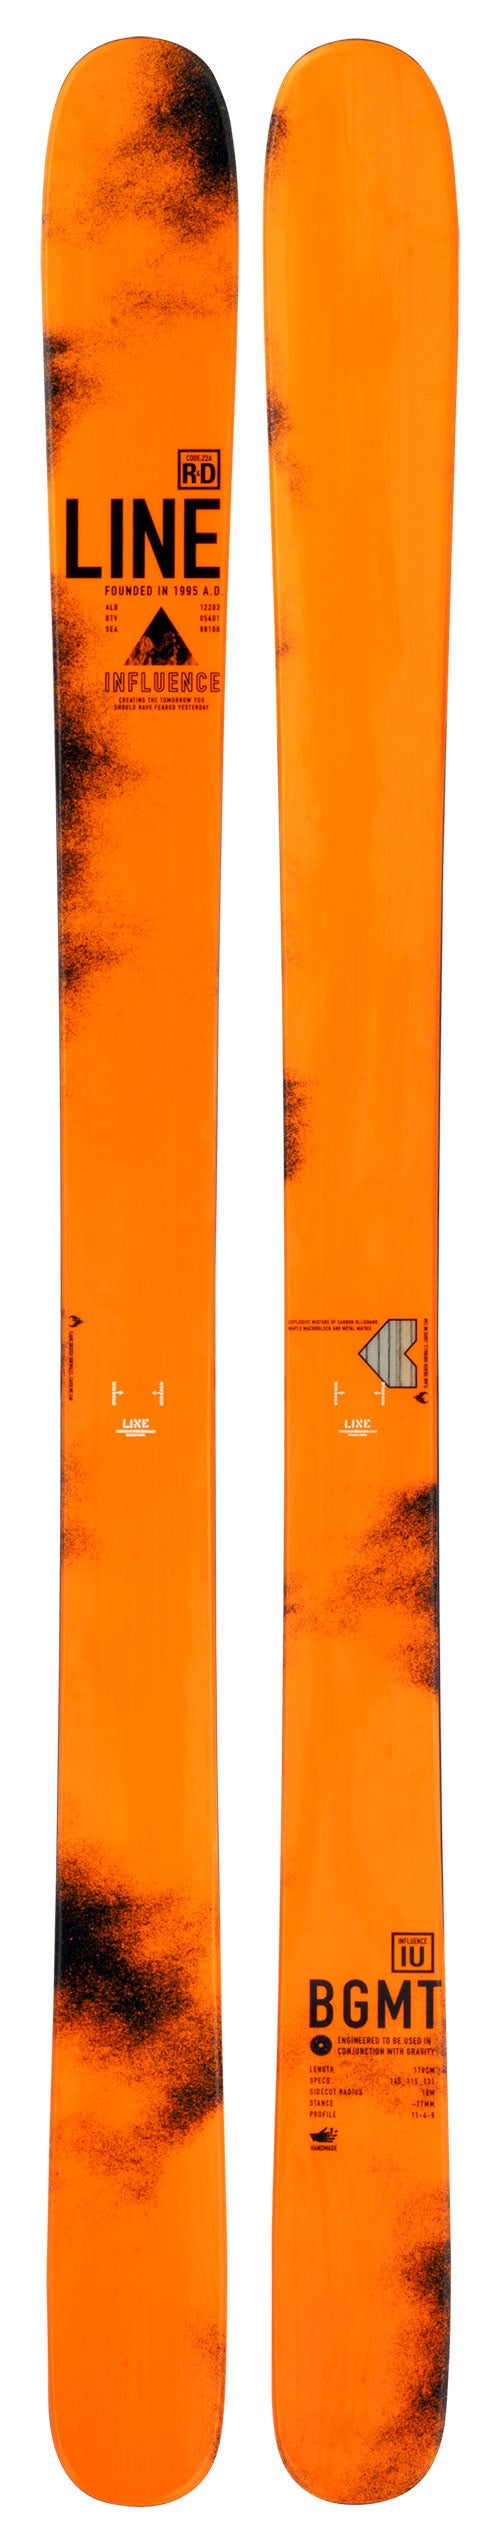 LINE SKIS INFLUENCE 115 ライン スキー - 板